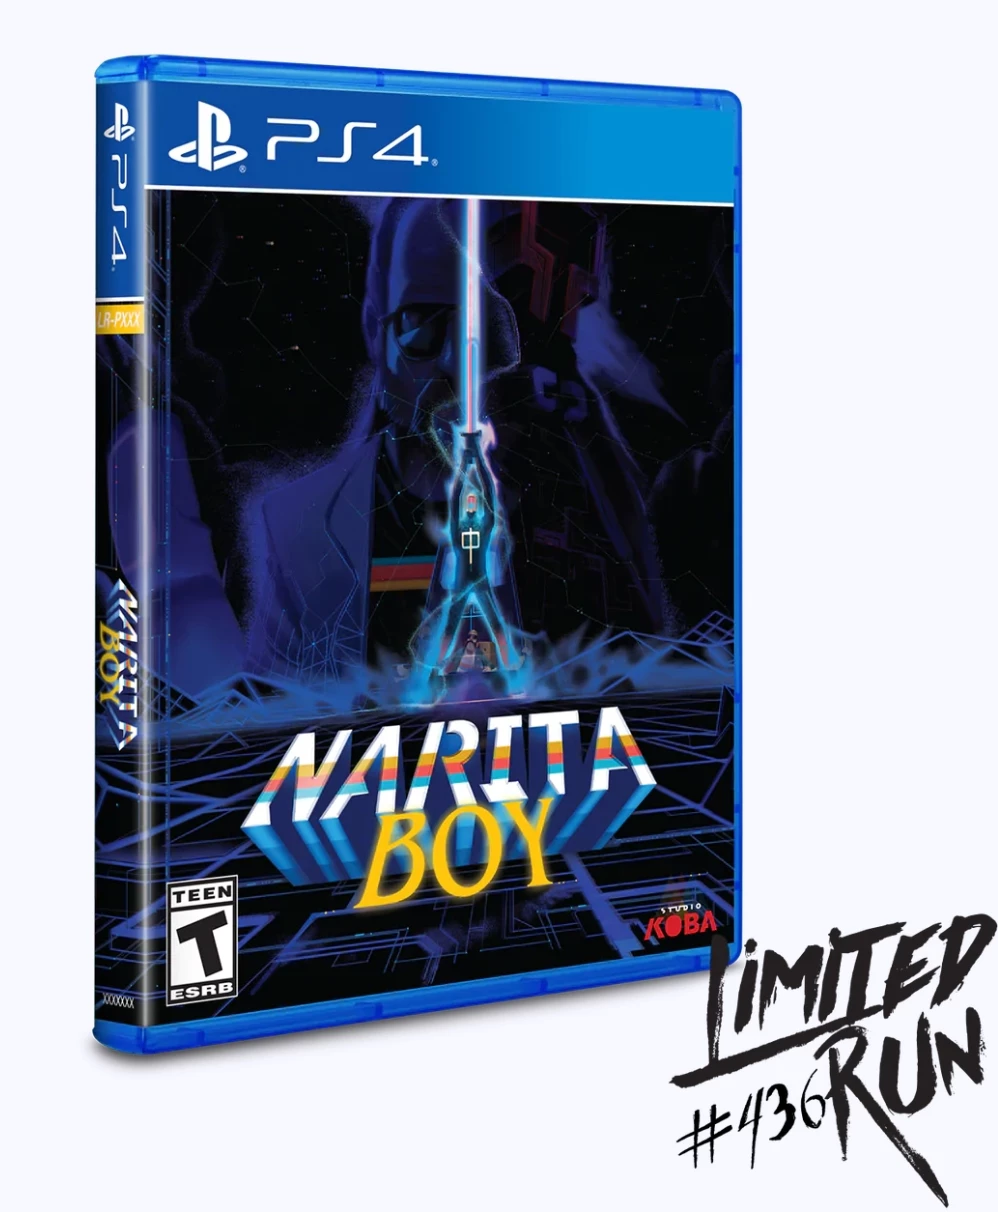 Narita Boy (Limited Run) (PS4), Studio Koba